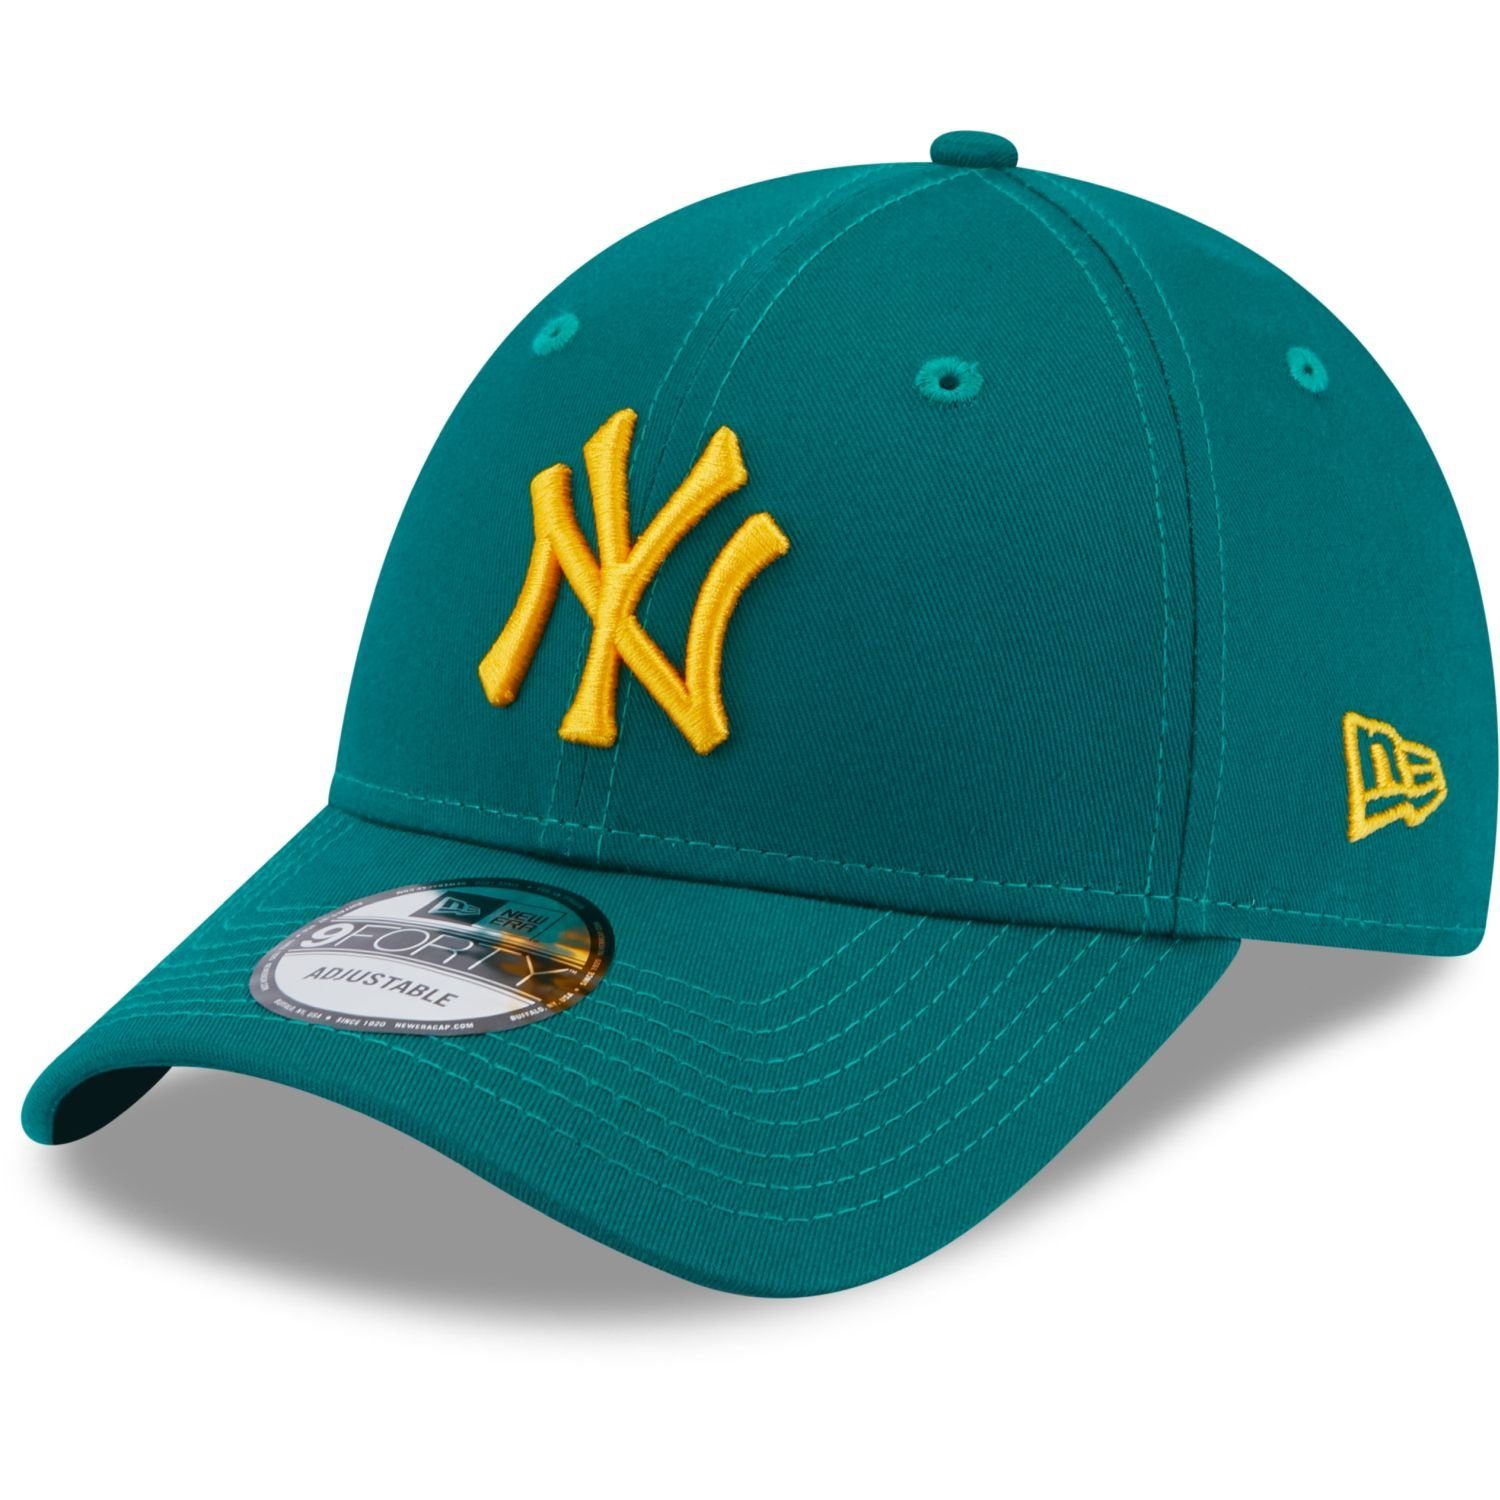 New Era Baseball Cap 9Forty Strapback New York Yankees blaugrün dunkelgrün | Baseball Caps